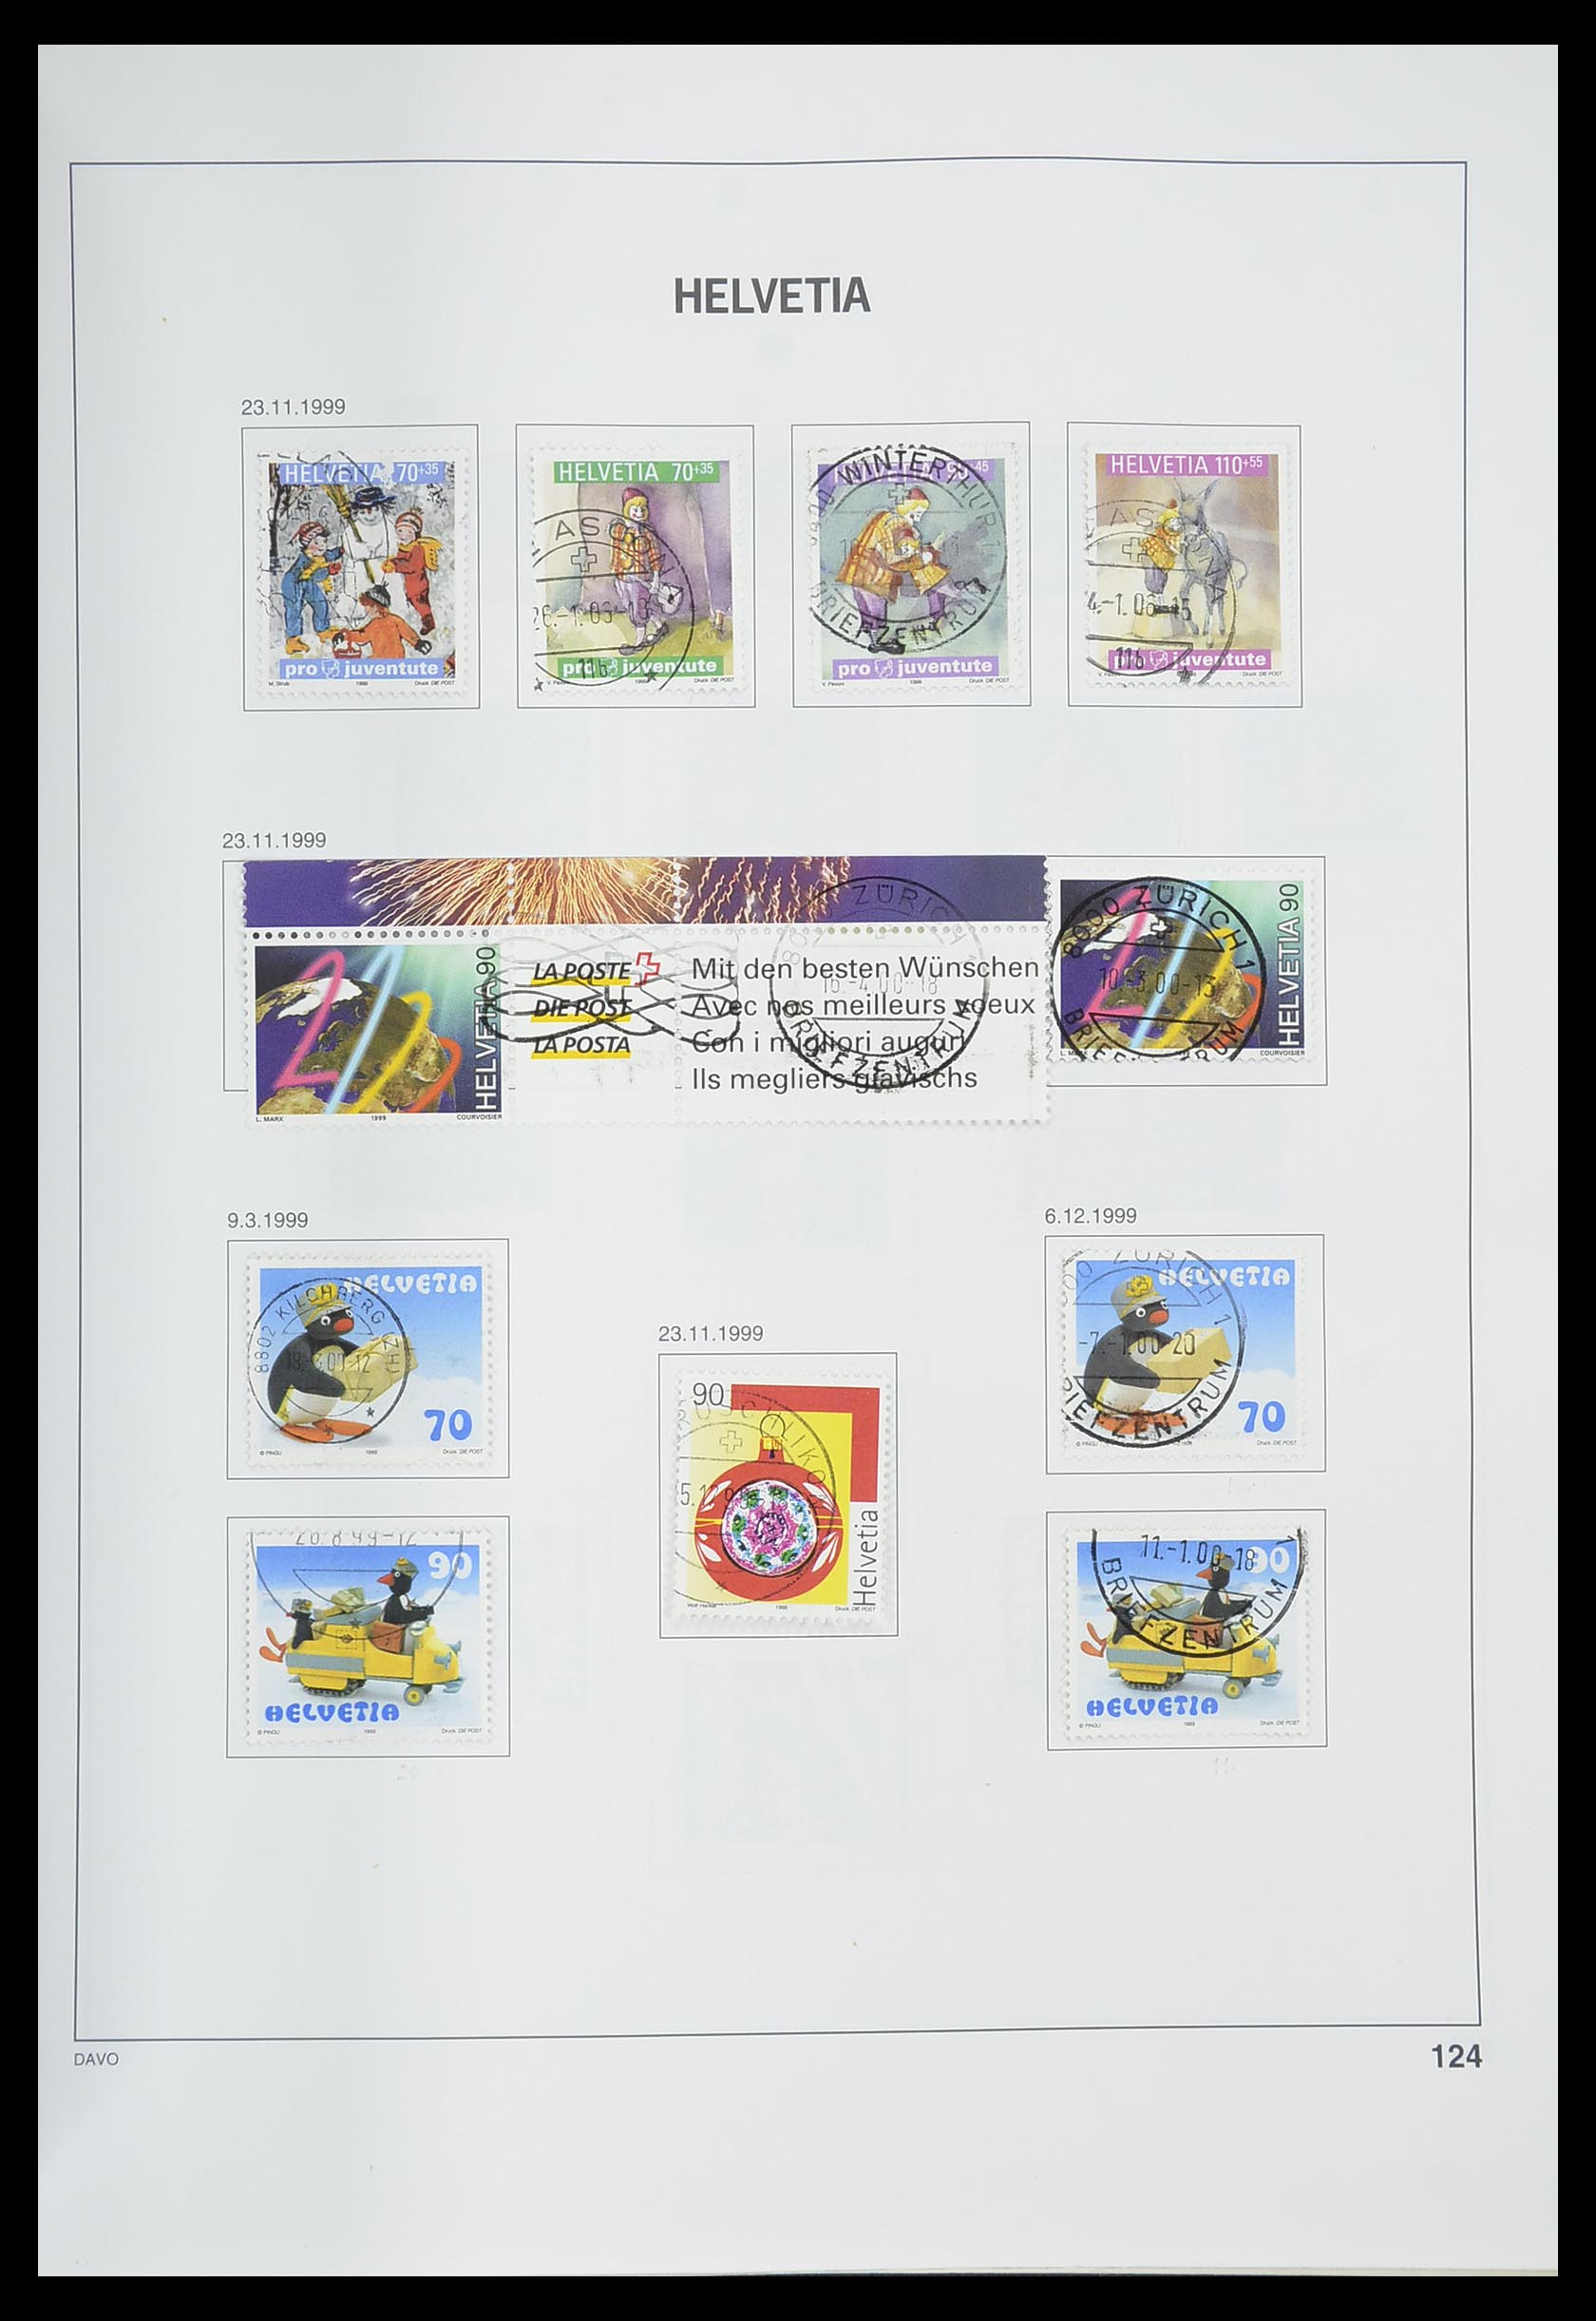 33559 125 - Stamp collection 33559 Switzerland 1850-2000.